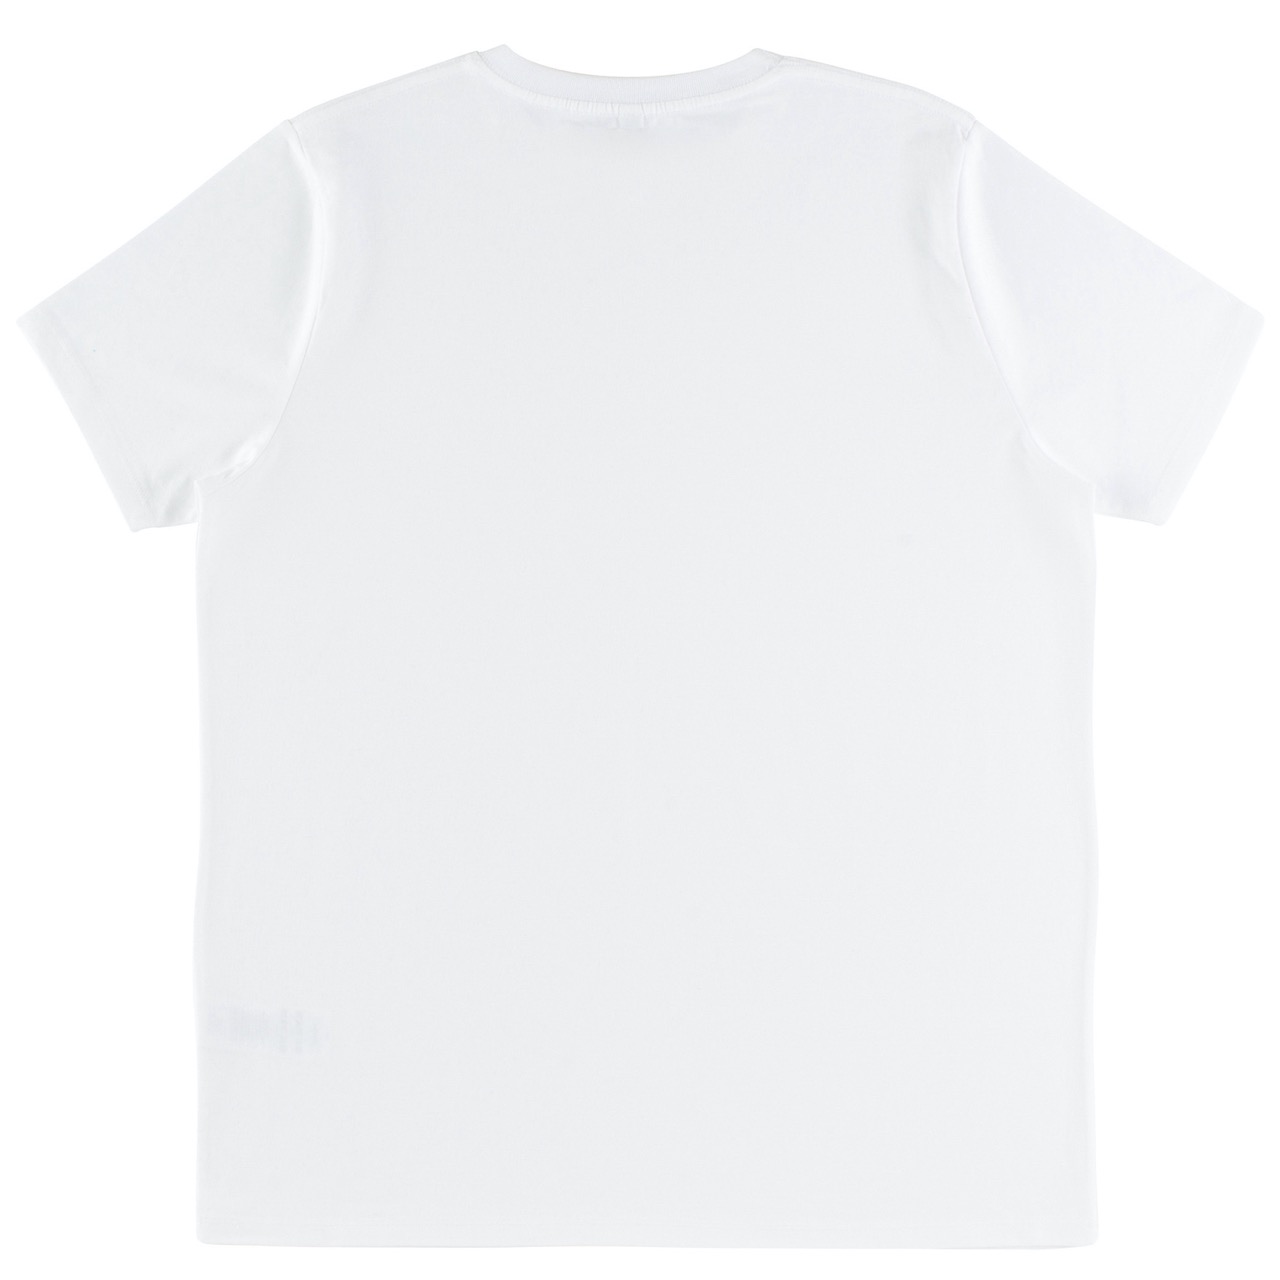 Camiseta blanca manga corta algodón ogánico - Holocene Classics Espalda